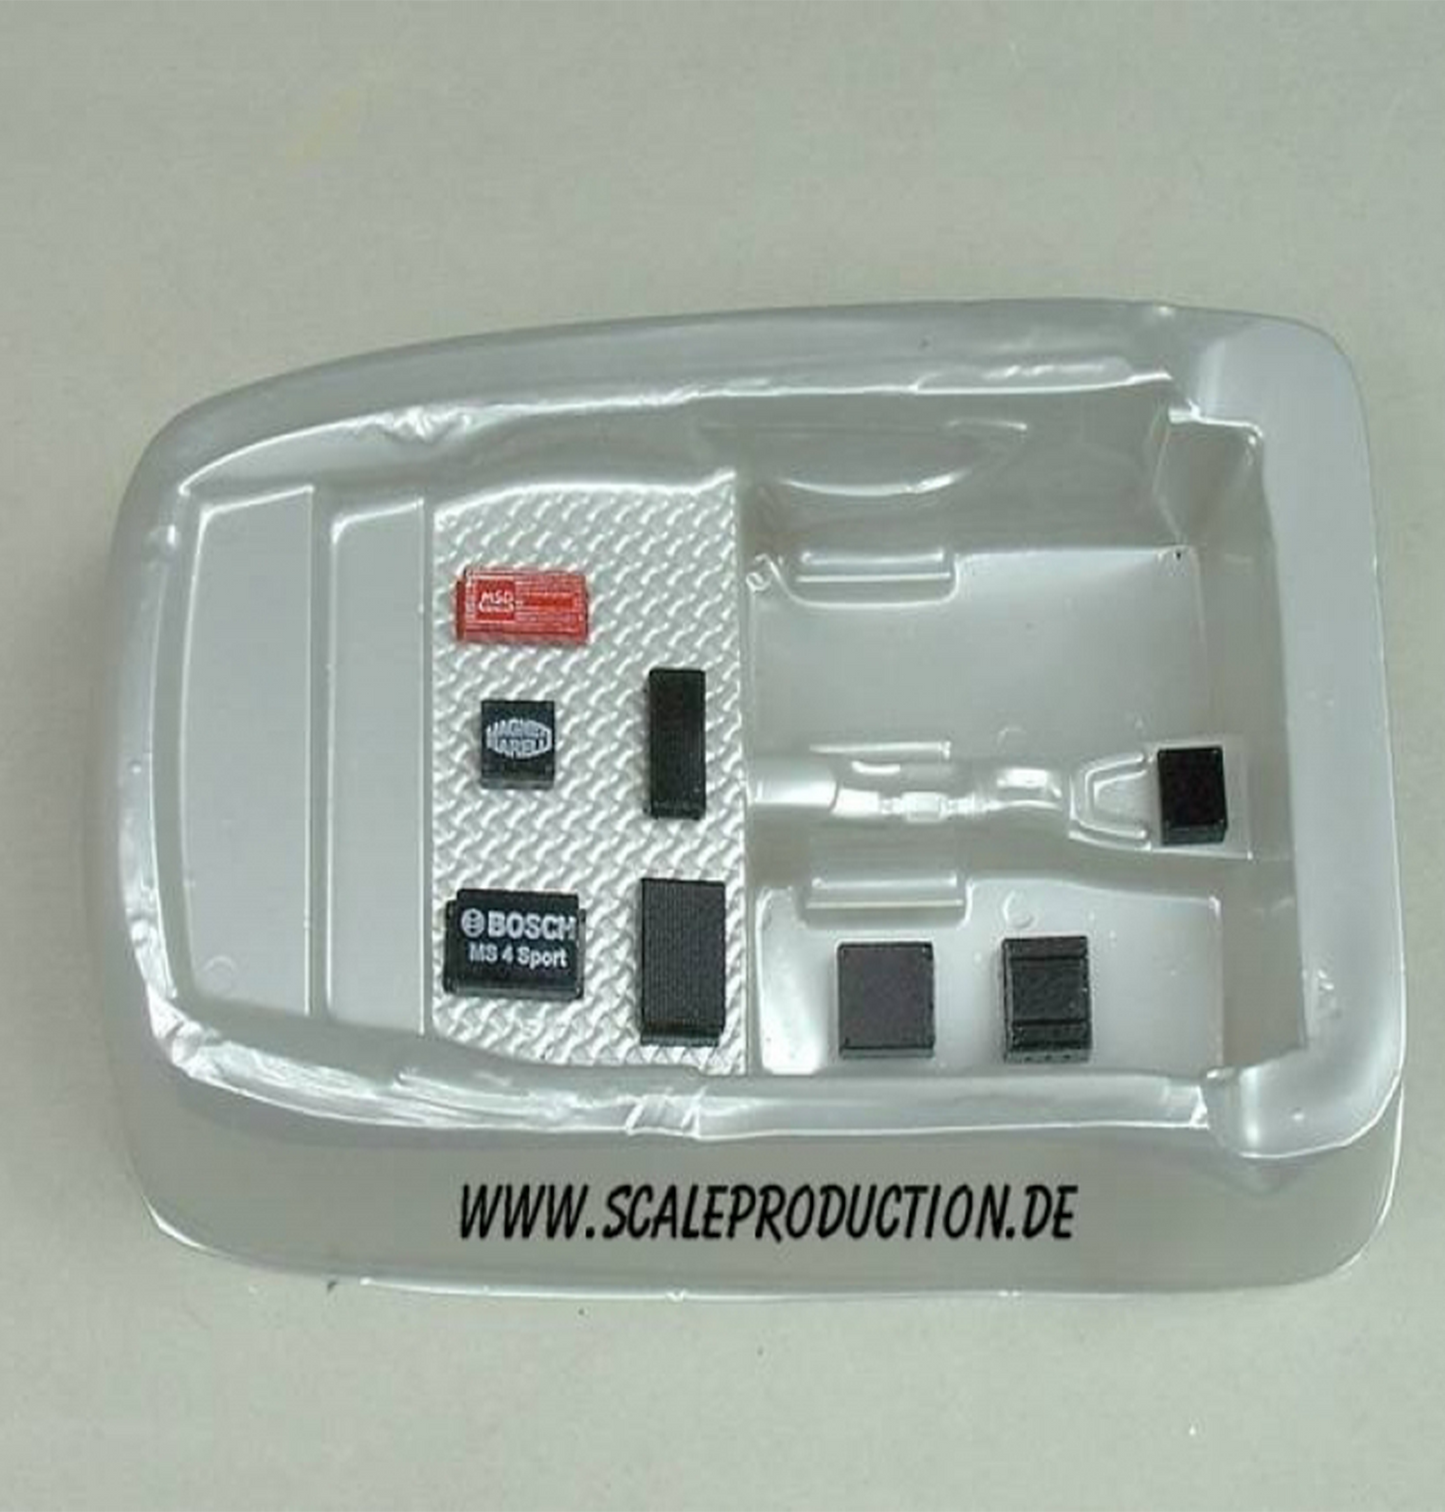 ScaleProduction "Elektronik - Boxen und LCD Display"